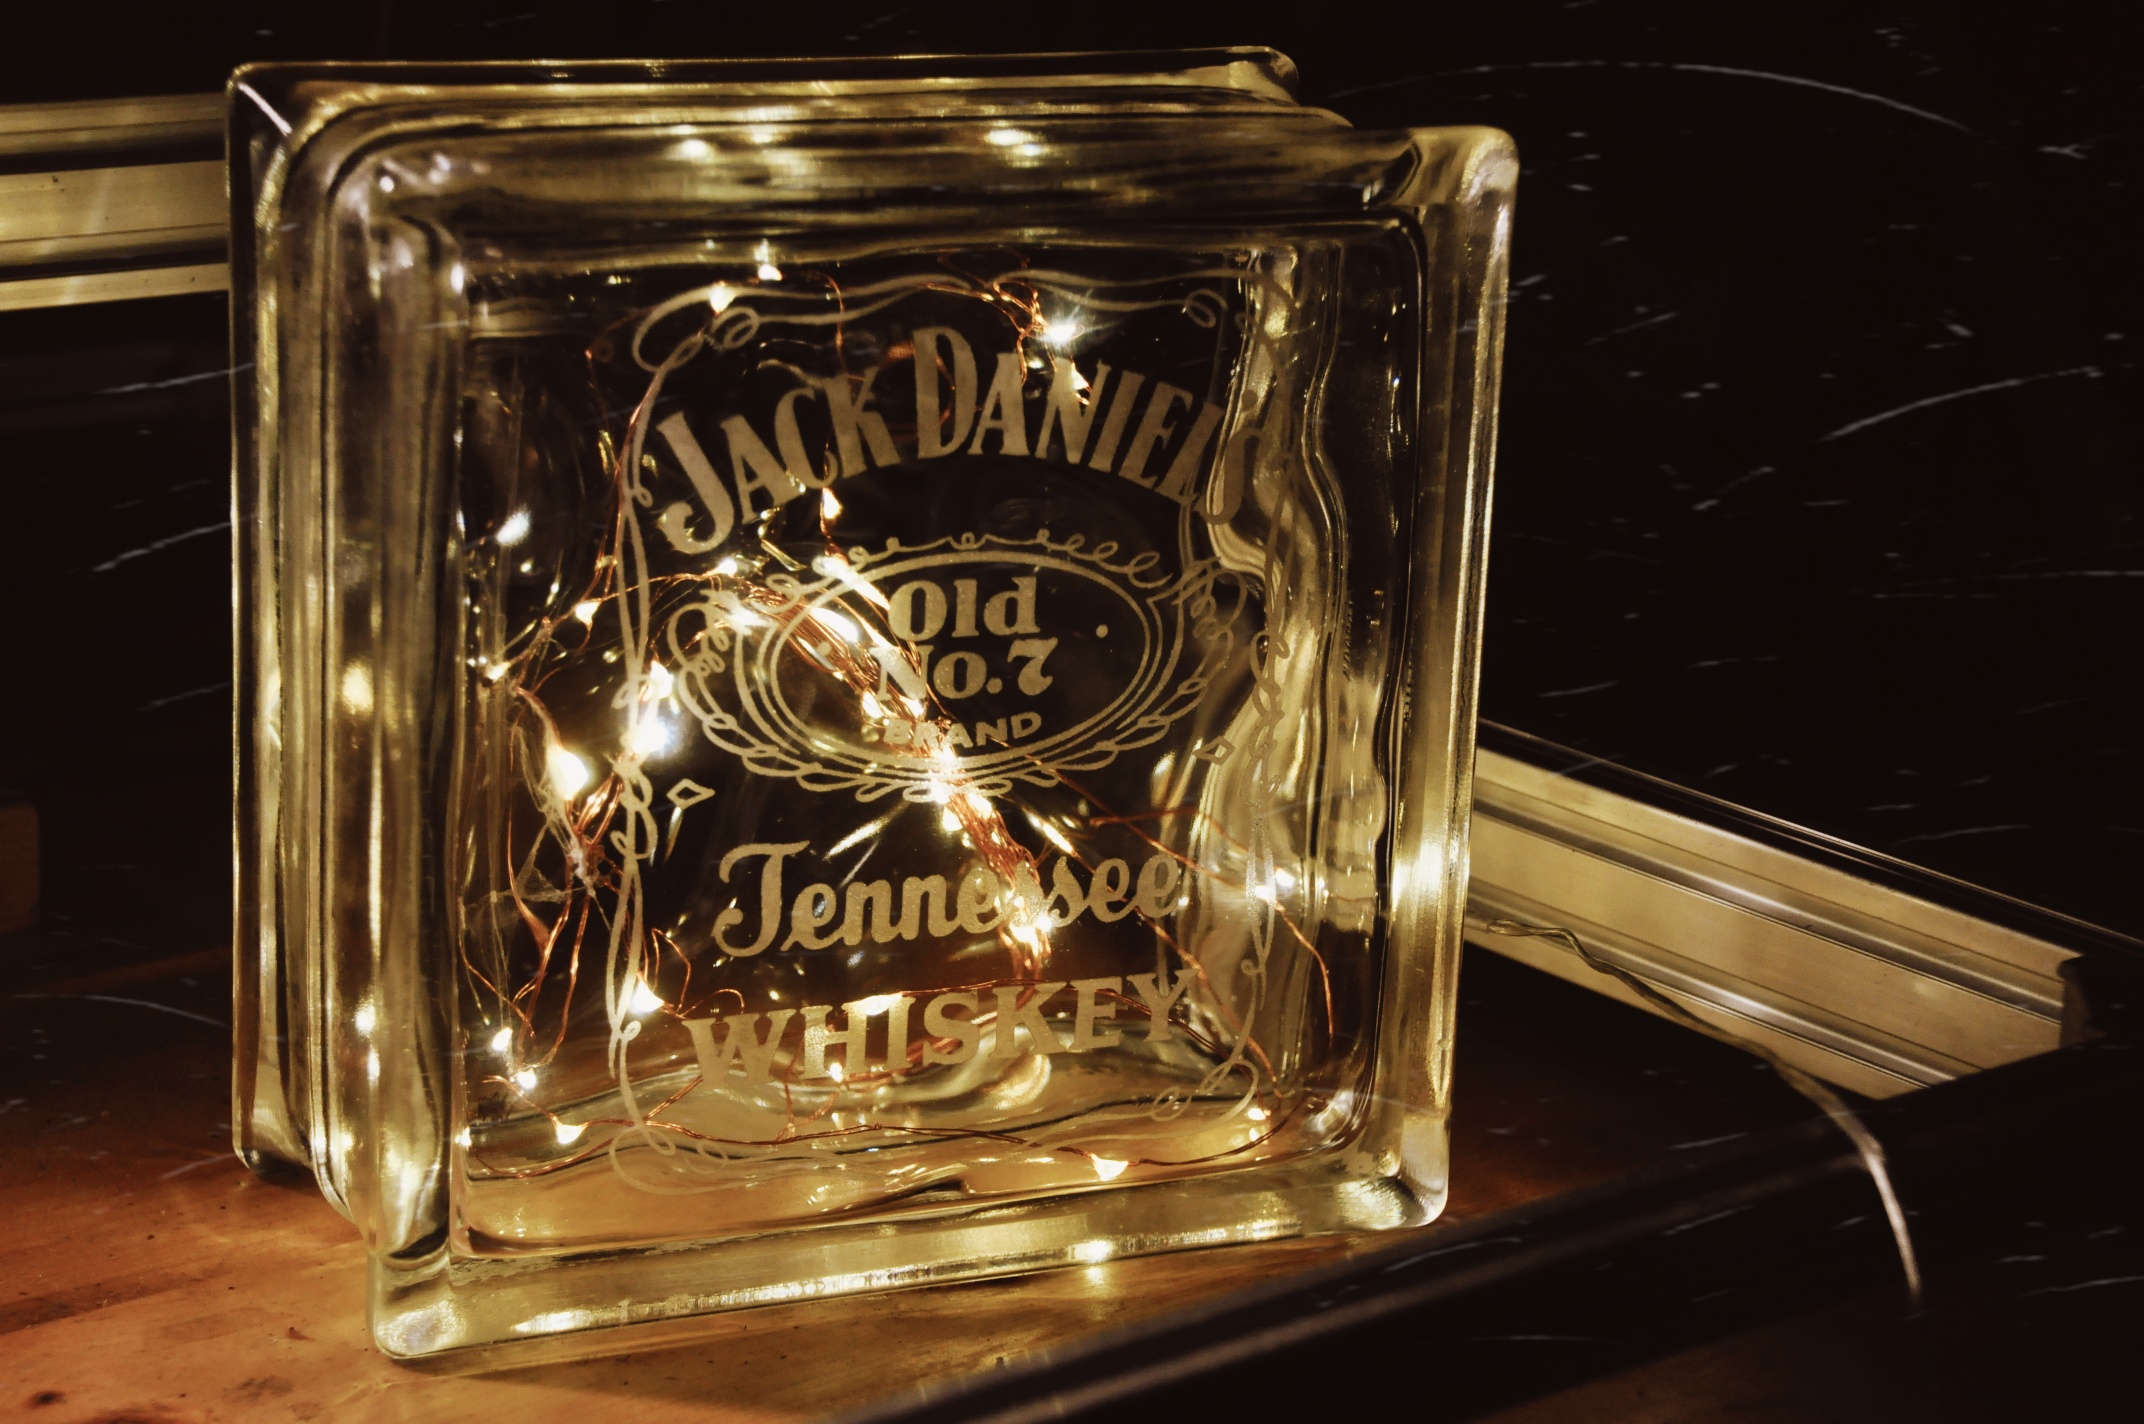 Jack Daniels glass engraving